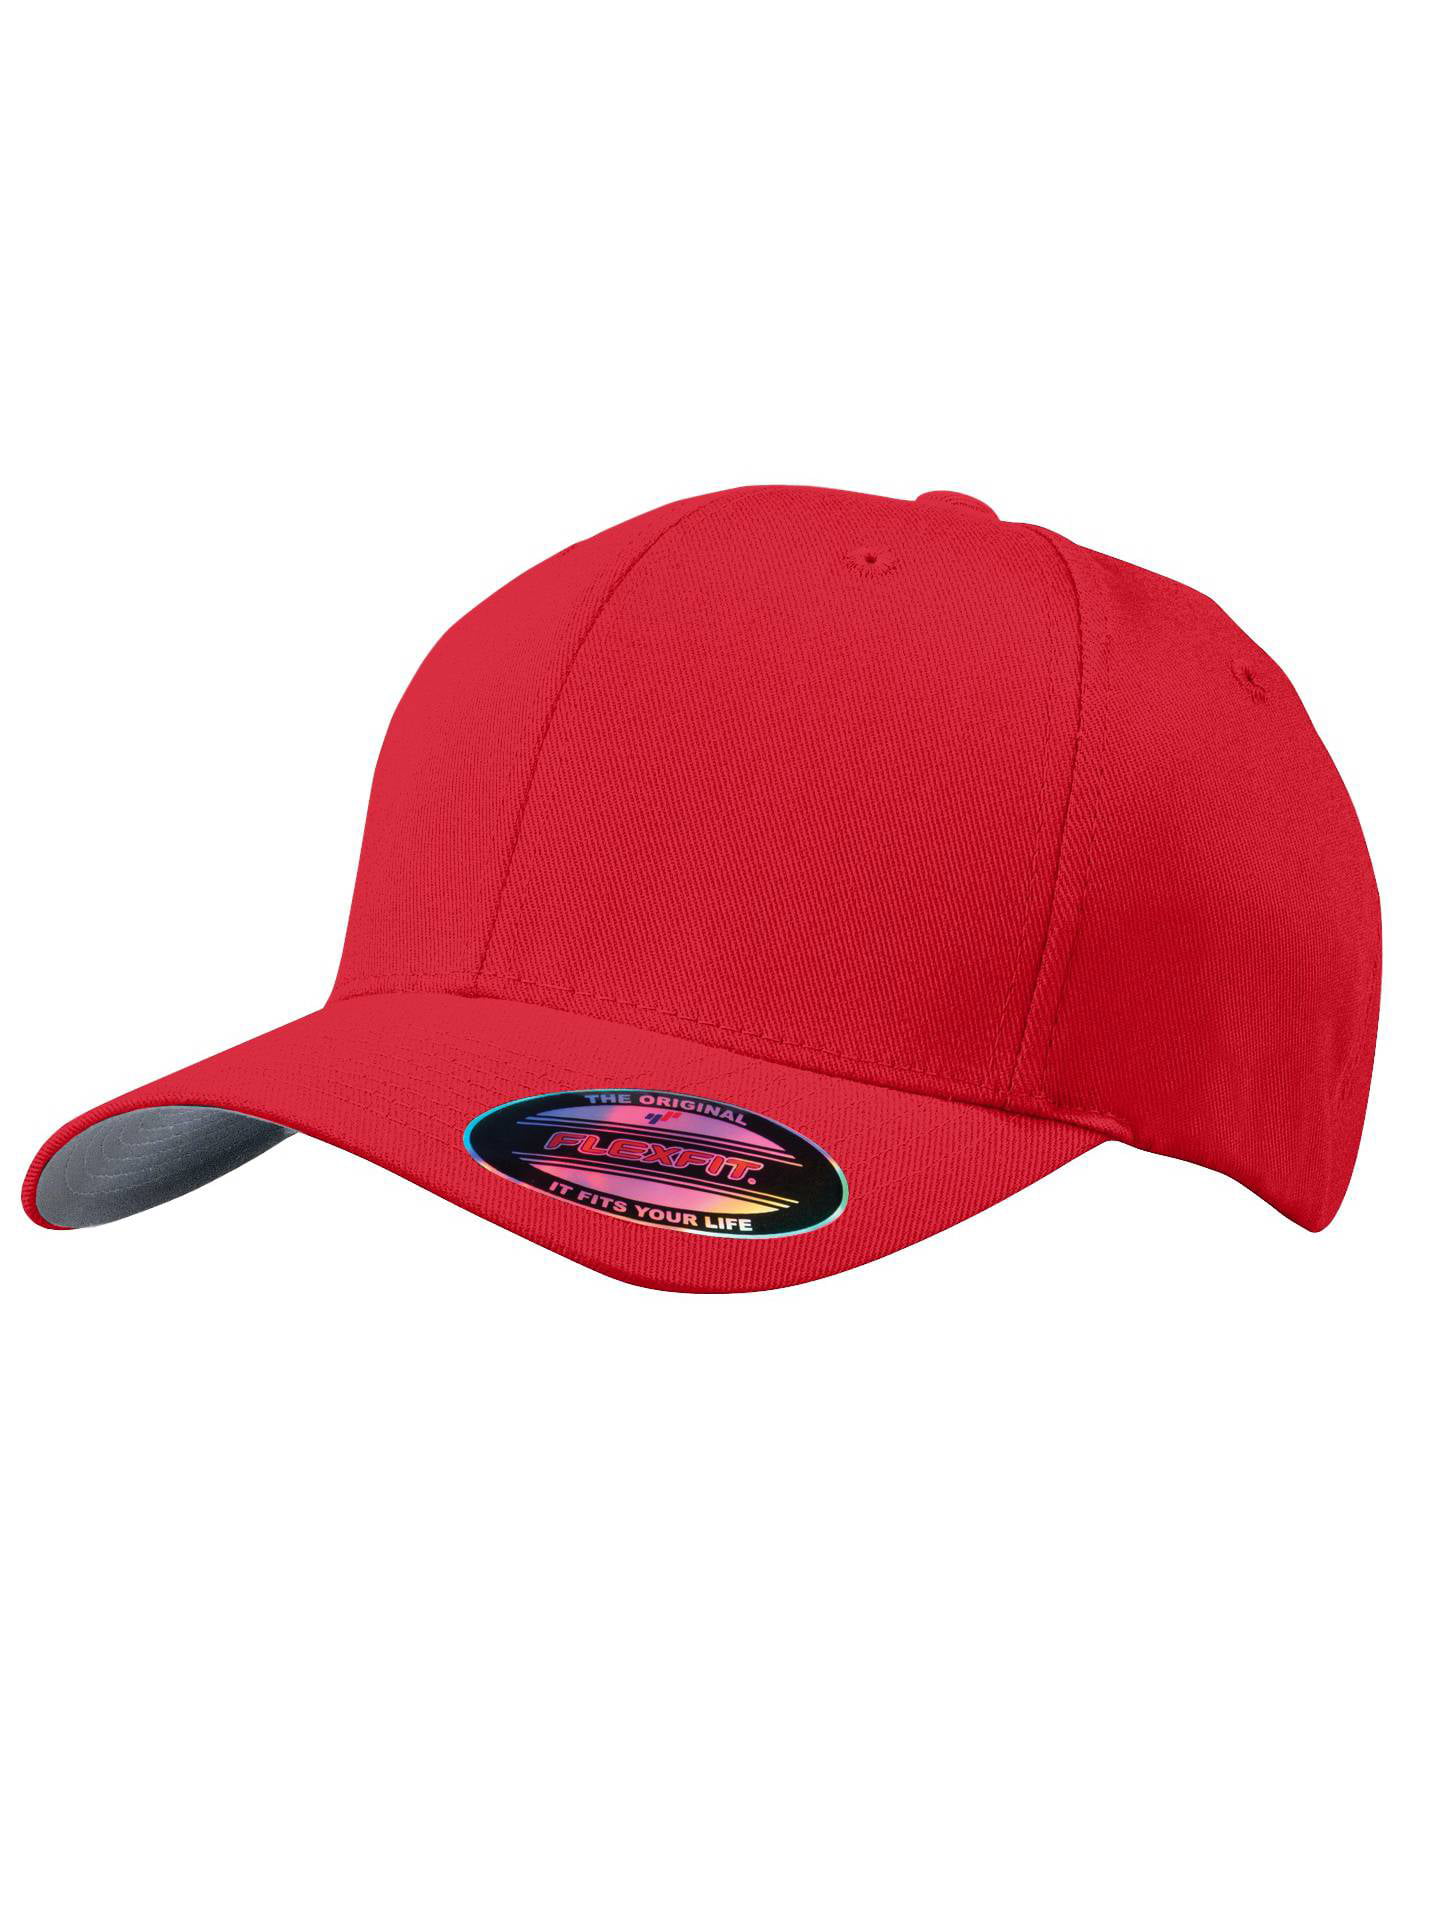 Top Headwear Flex Fit Baseball Cap - Red - Large/X-Large